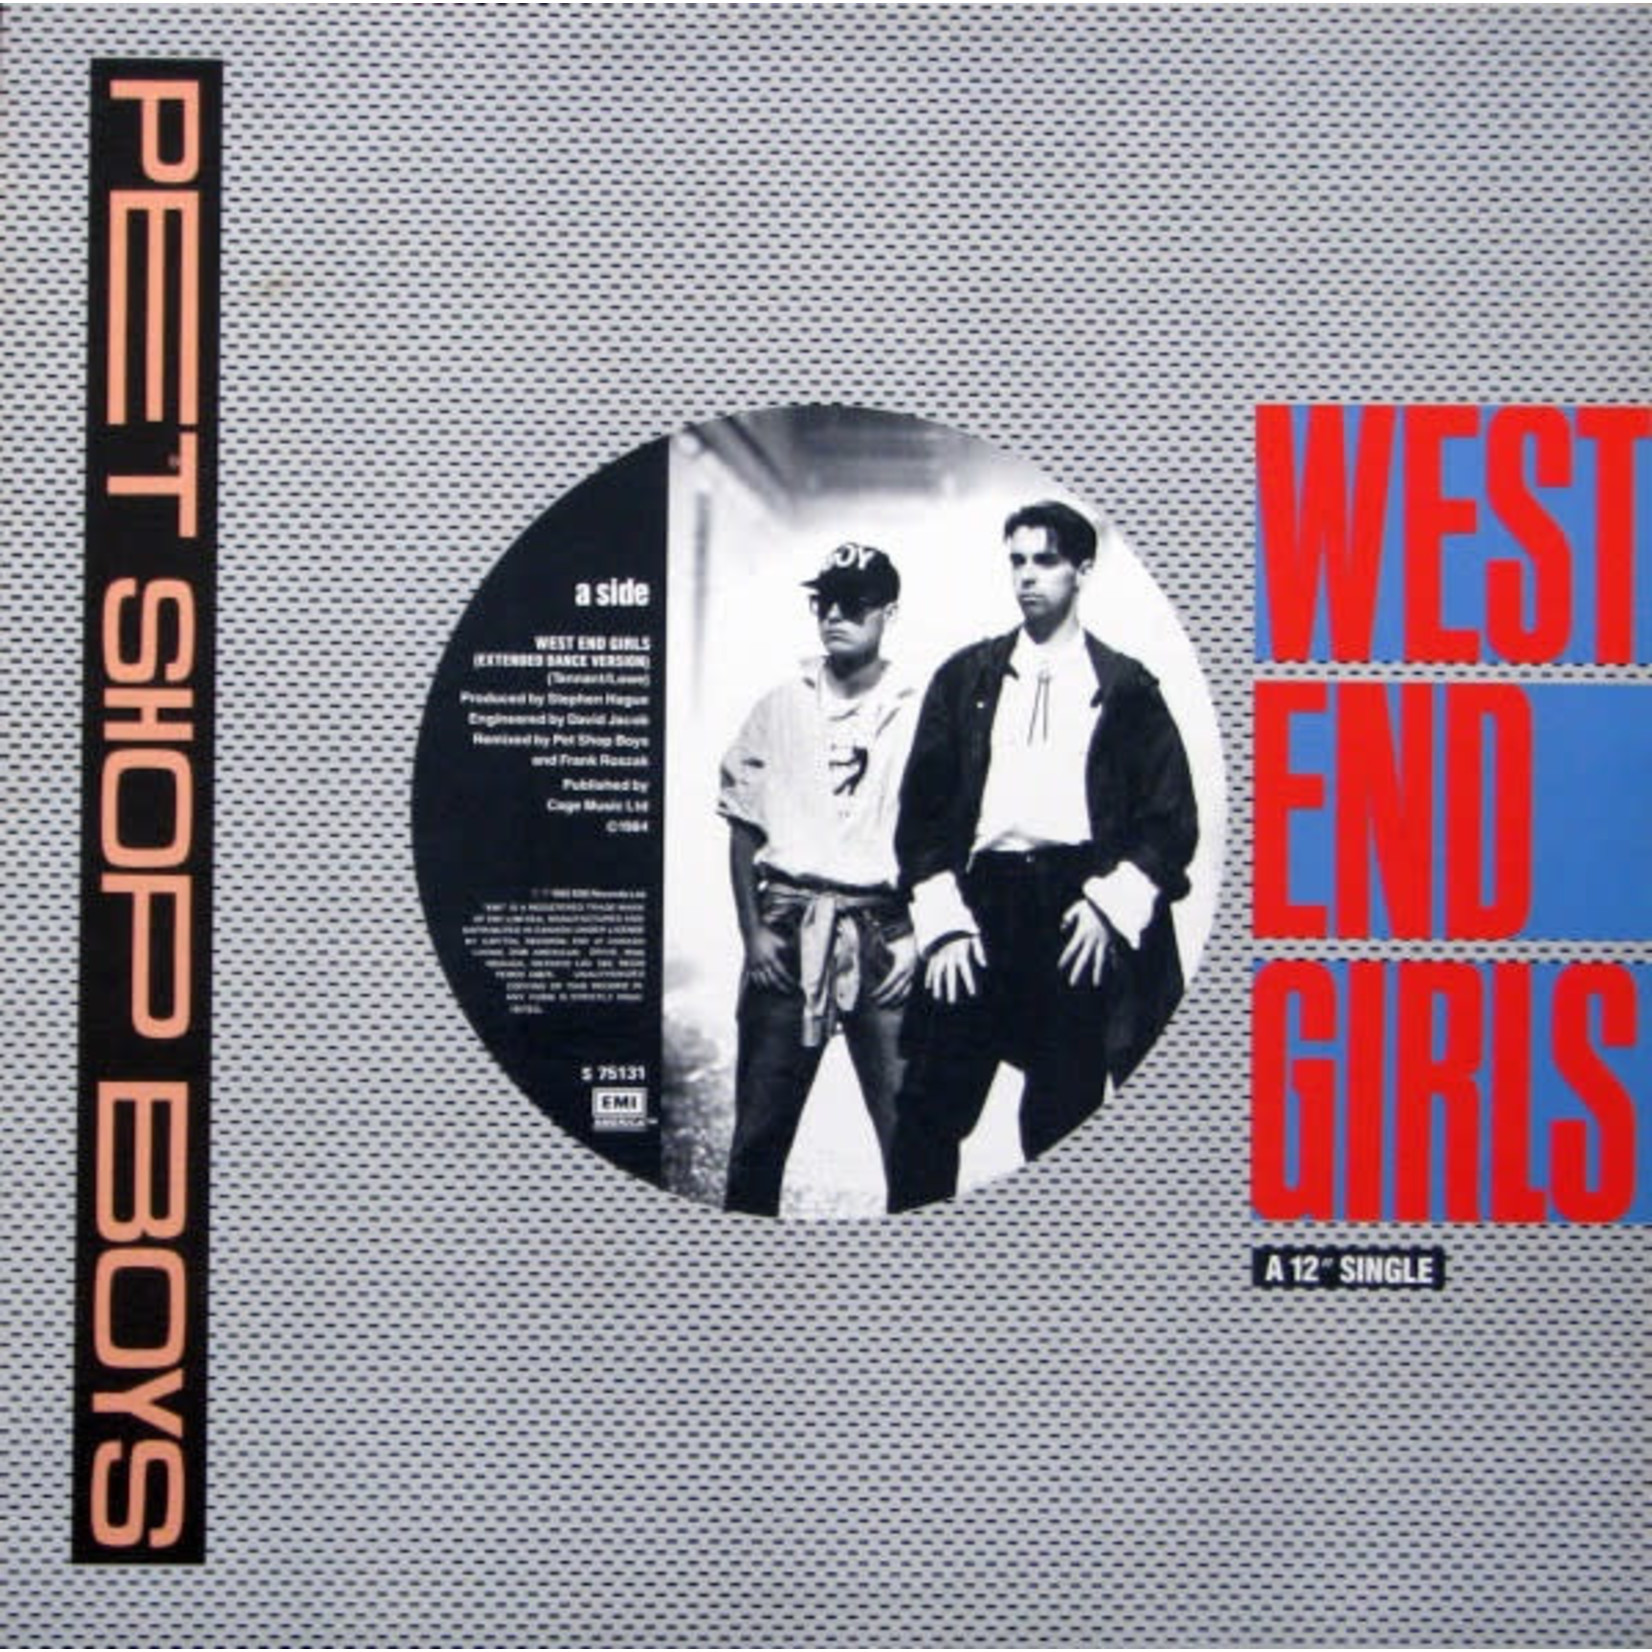 Pet Shop Boys: West End Girls (12") [VINTAGE]